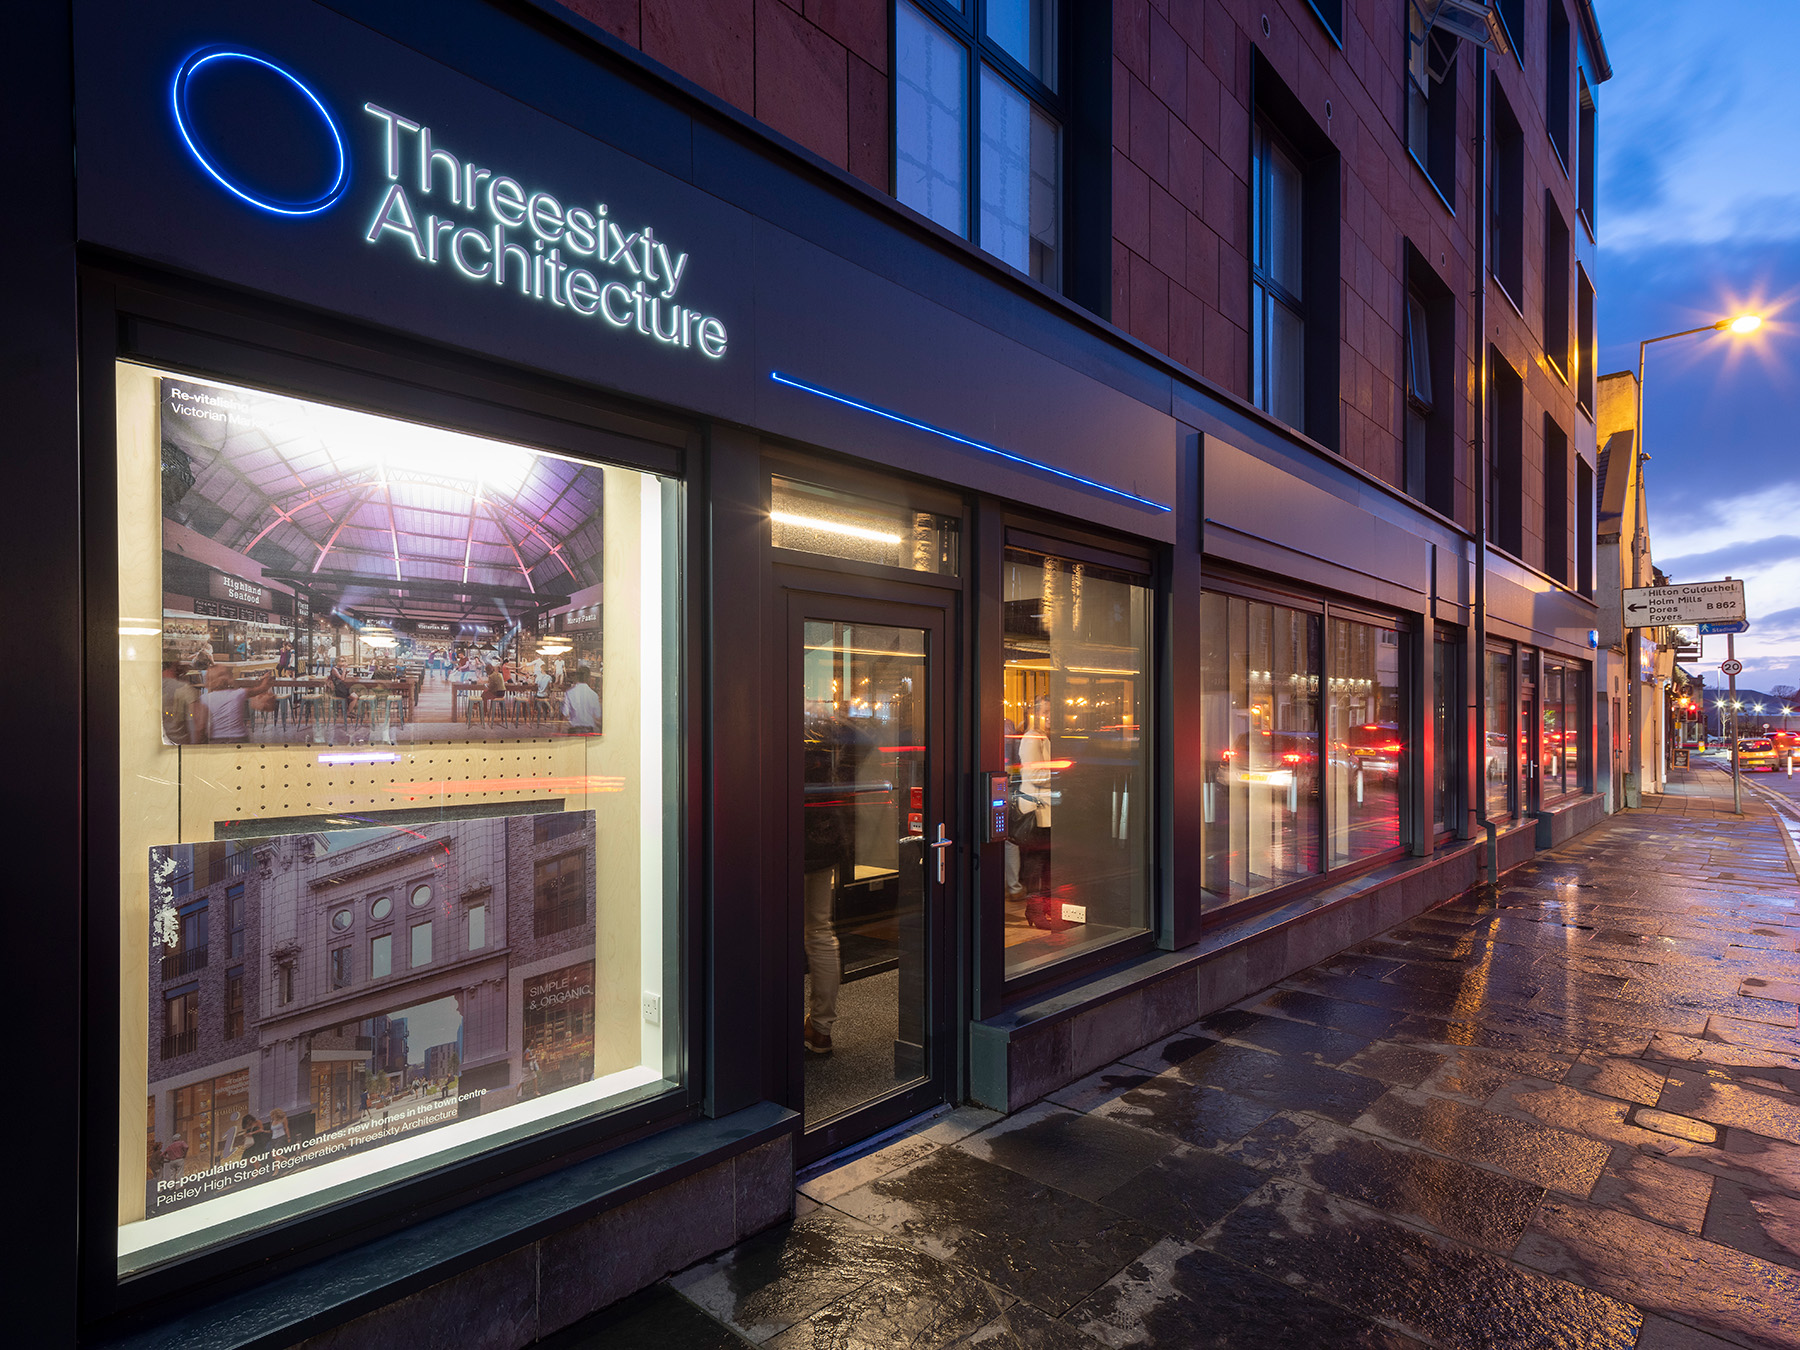 Threesixty Architecture wins UK-wide workplace award